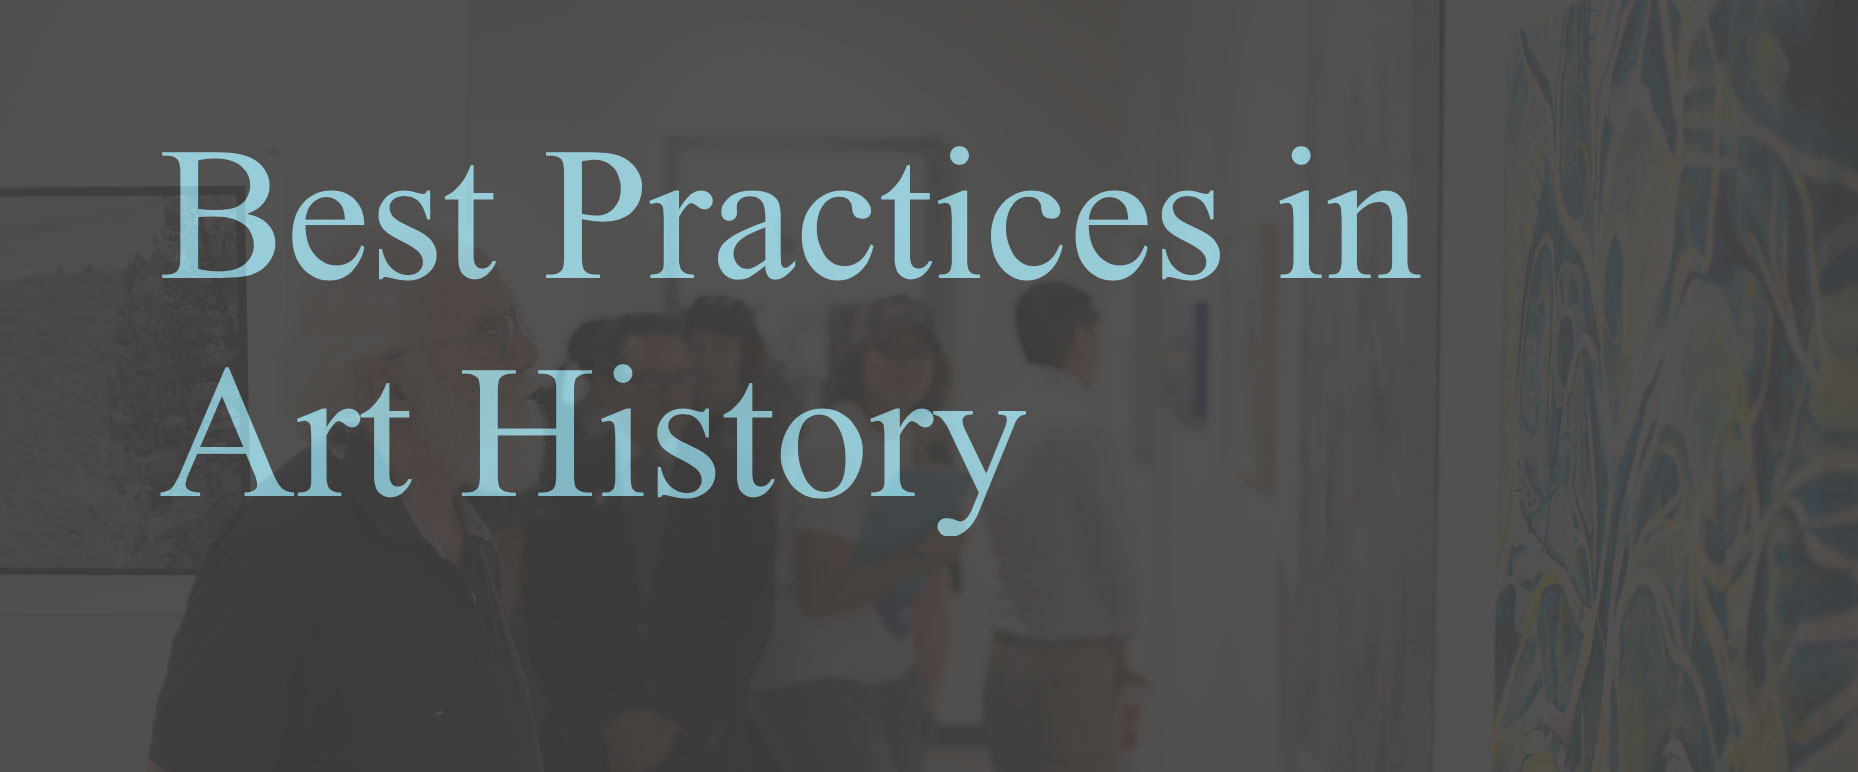 Best Practices in Art History banner